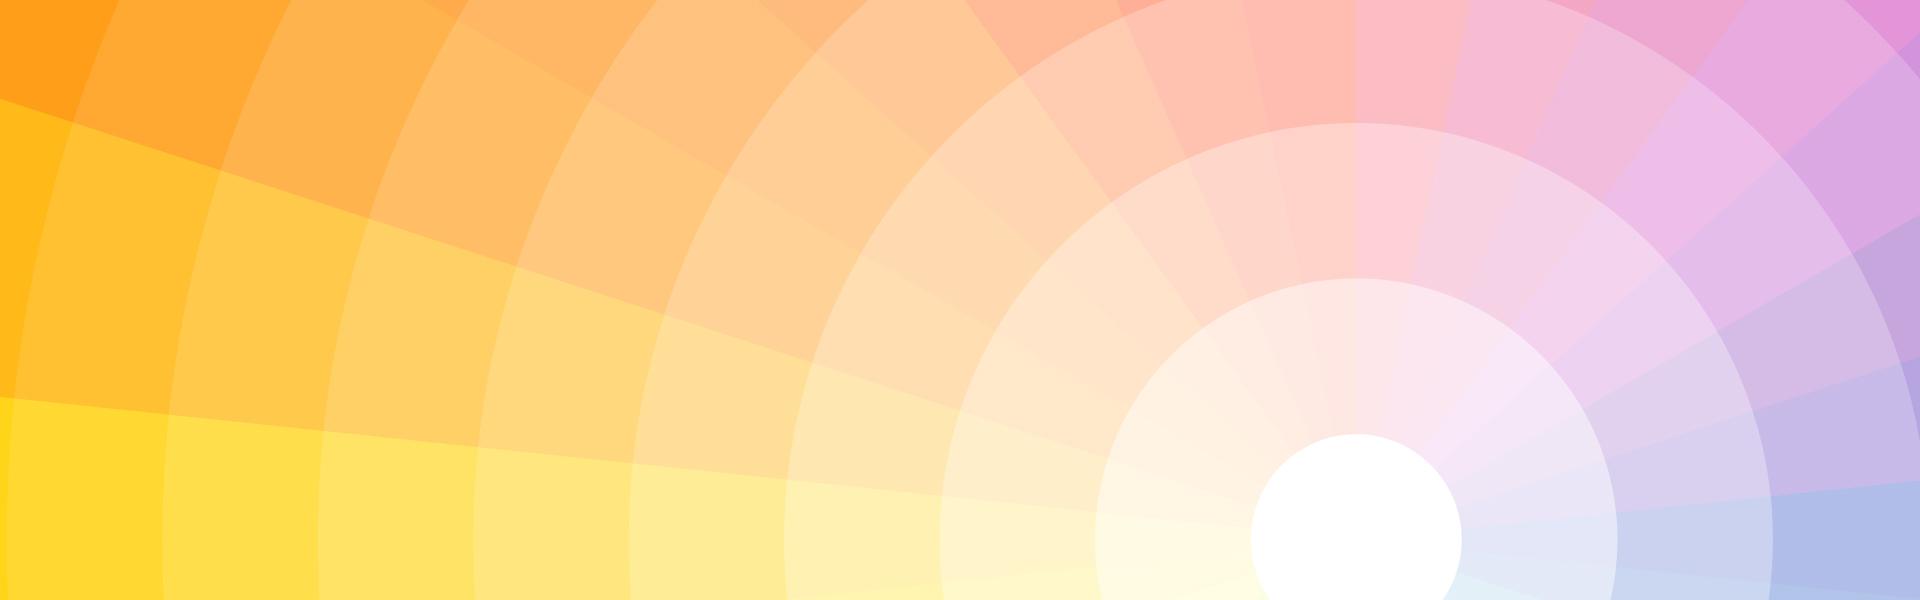 LBCC Innovation Rainbow spectrum banner image